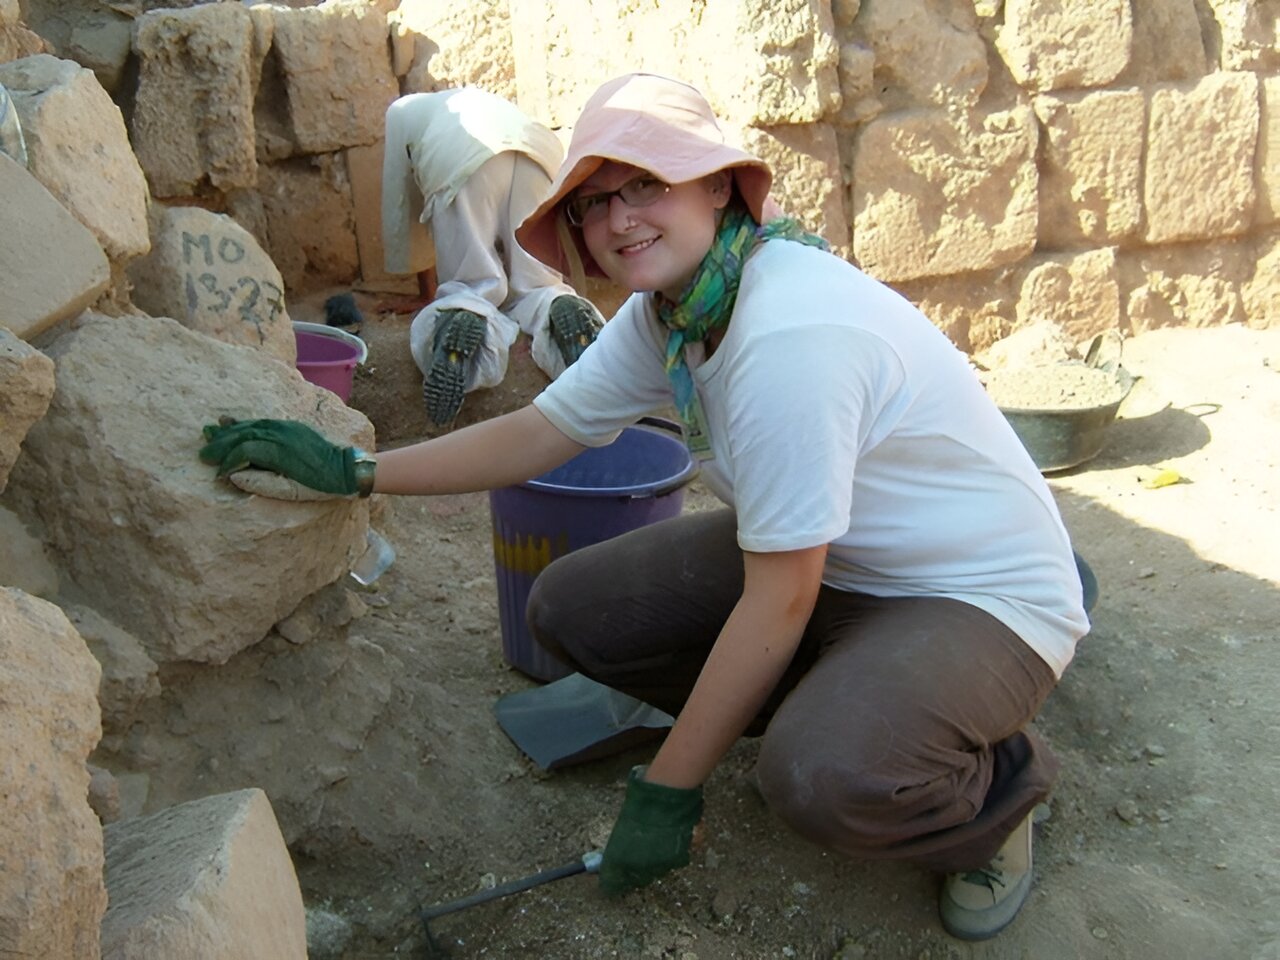 Dr Sophie Lund Rasmussen at the excavation site.